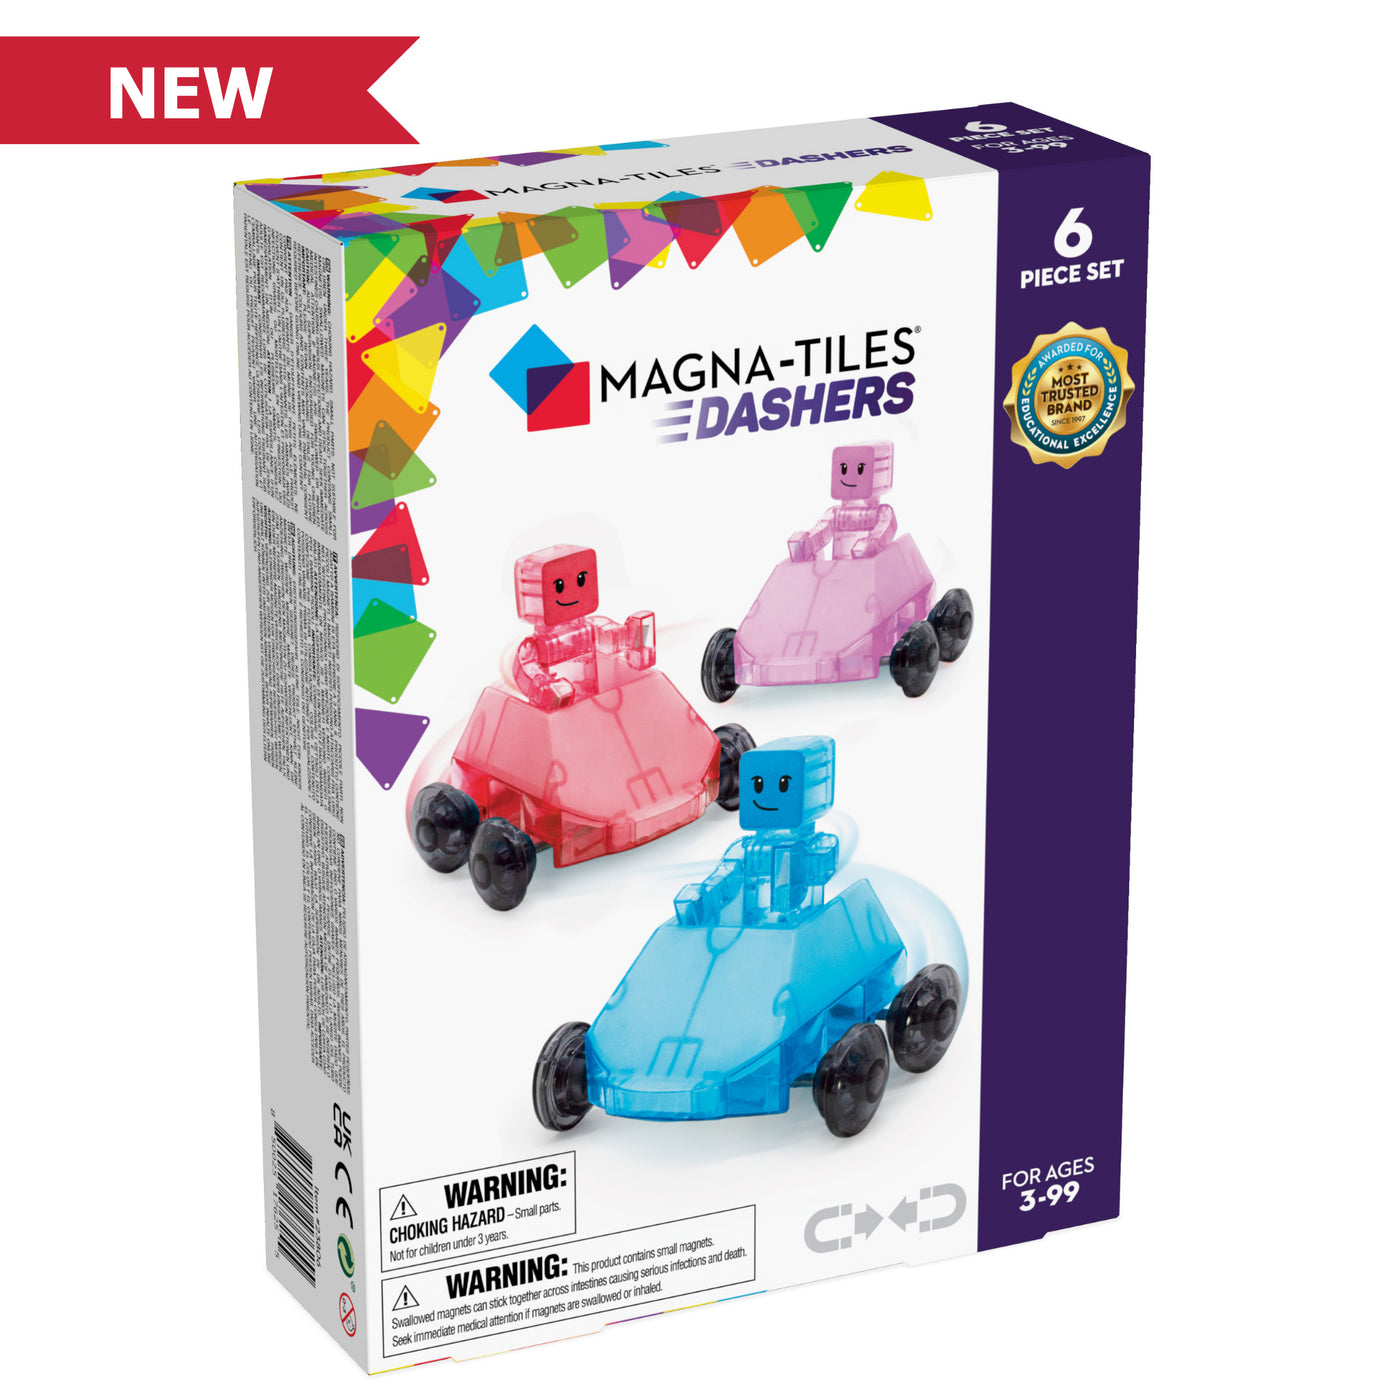 Magnatiles Dashers 6-Piece Set